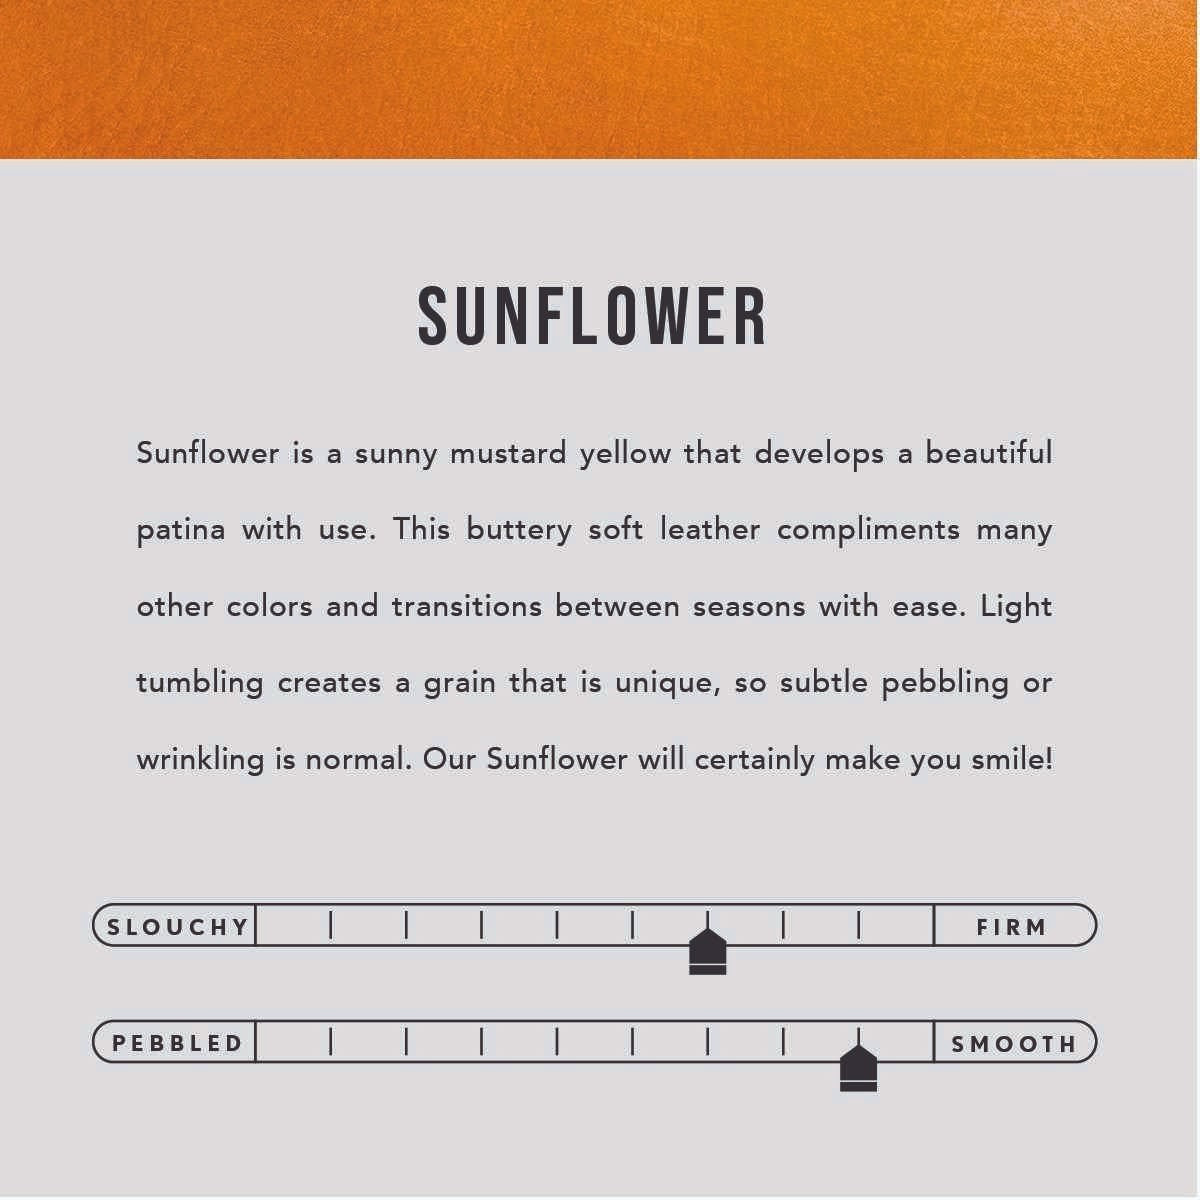 Sunflower  | infographic